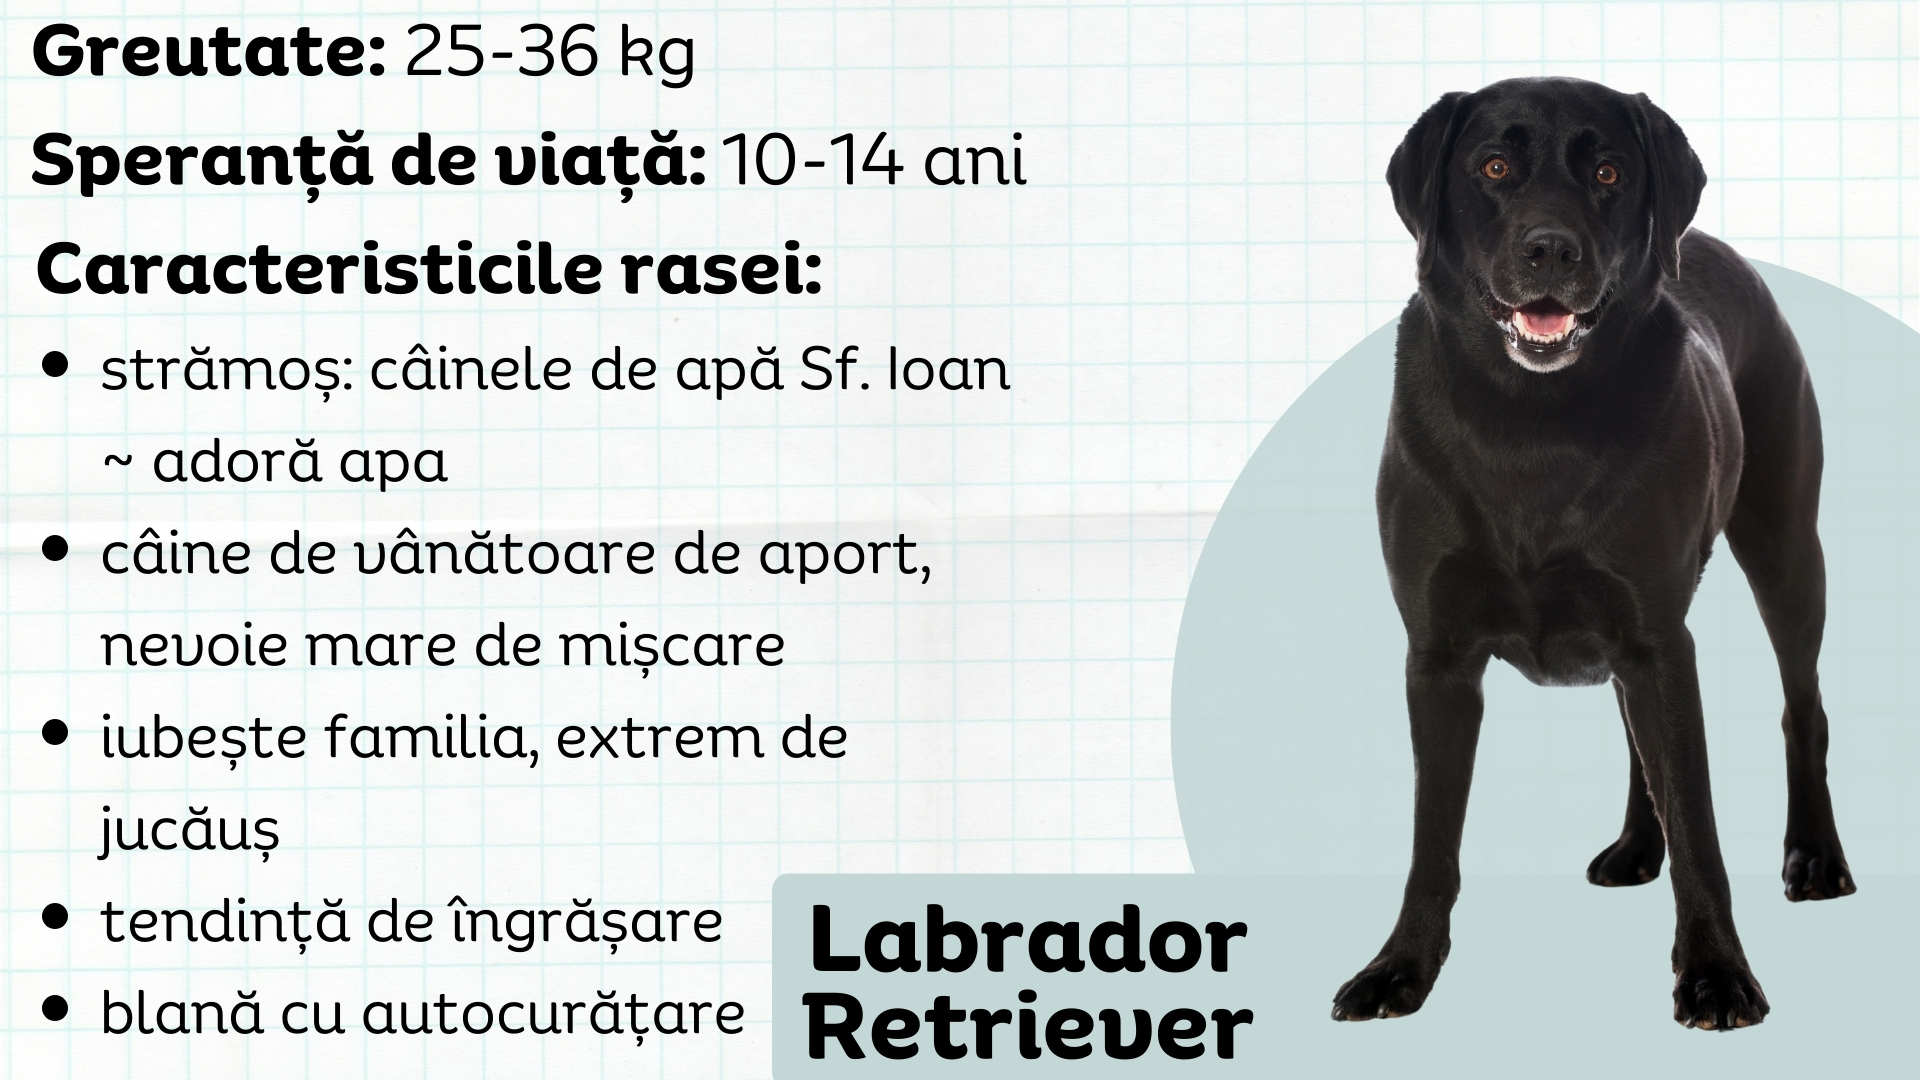 Labrador Retriever - caracteristicile rasei